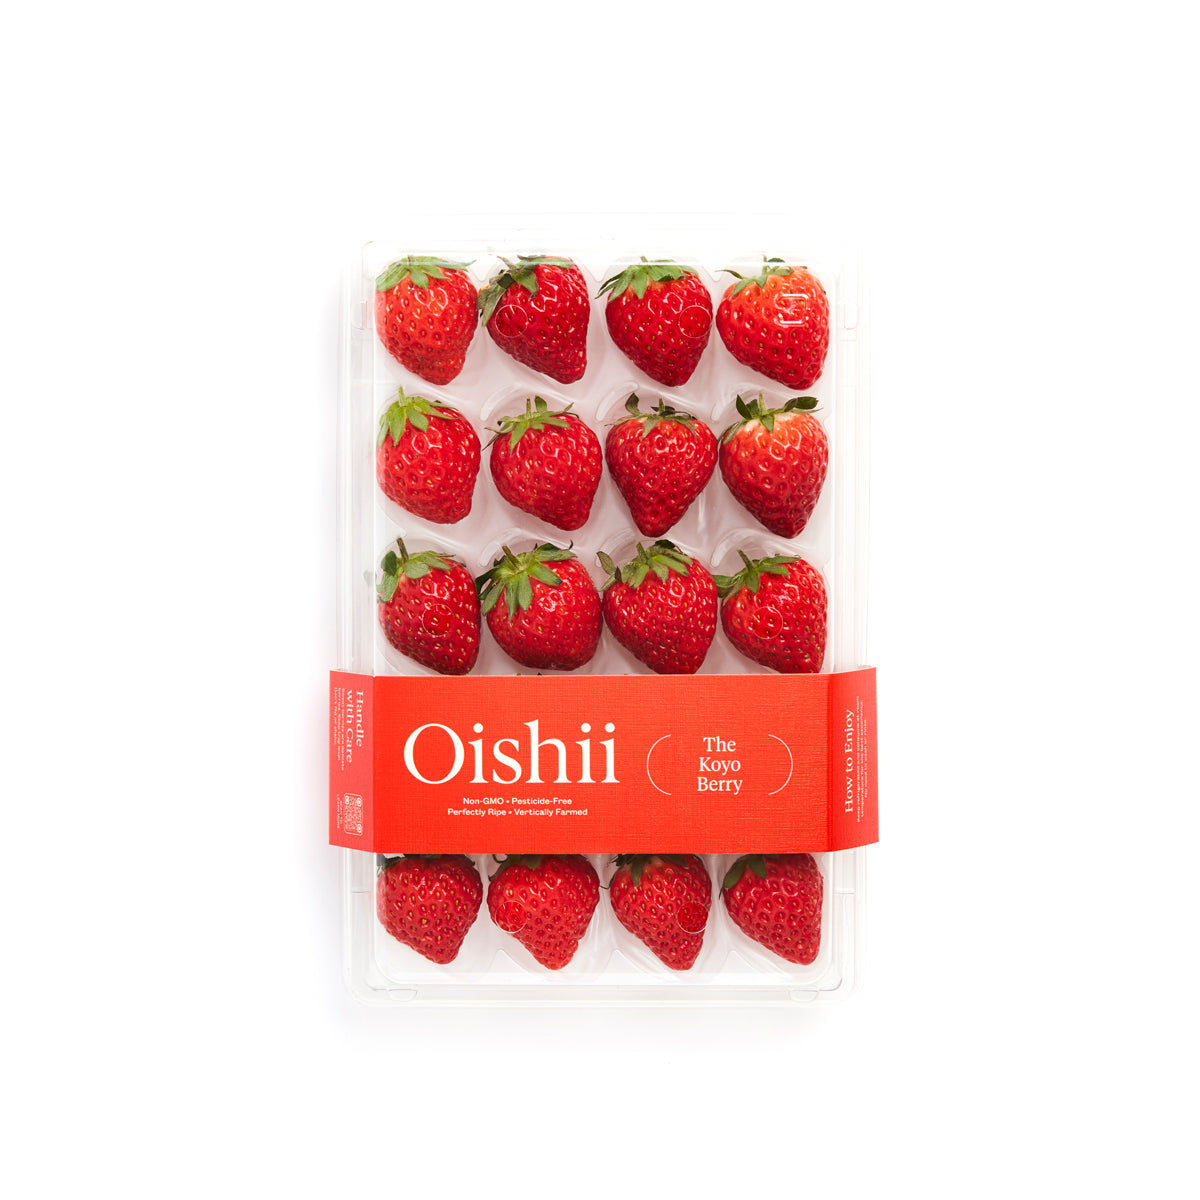 Oishii Koyo Berries 4 OZ